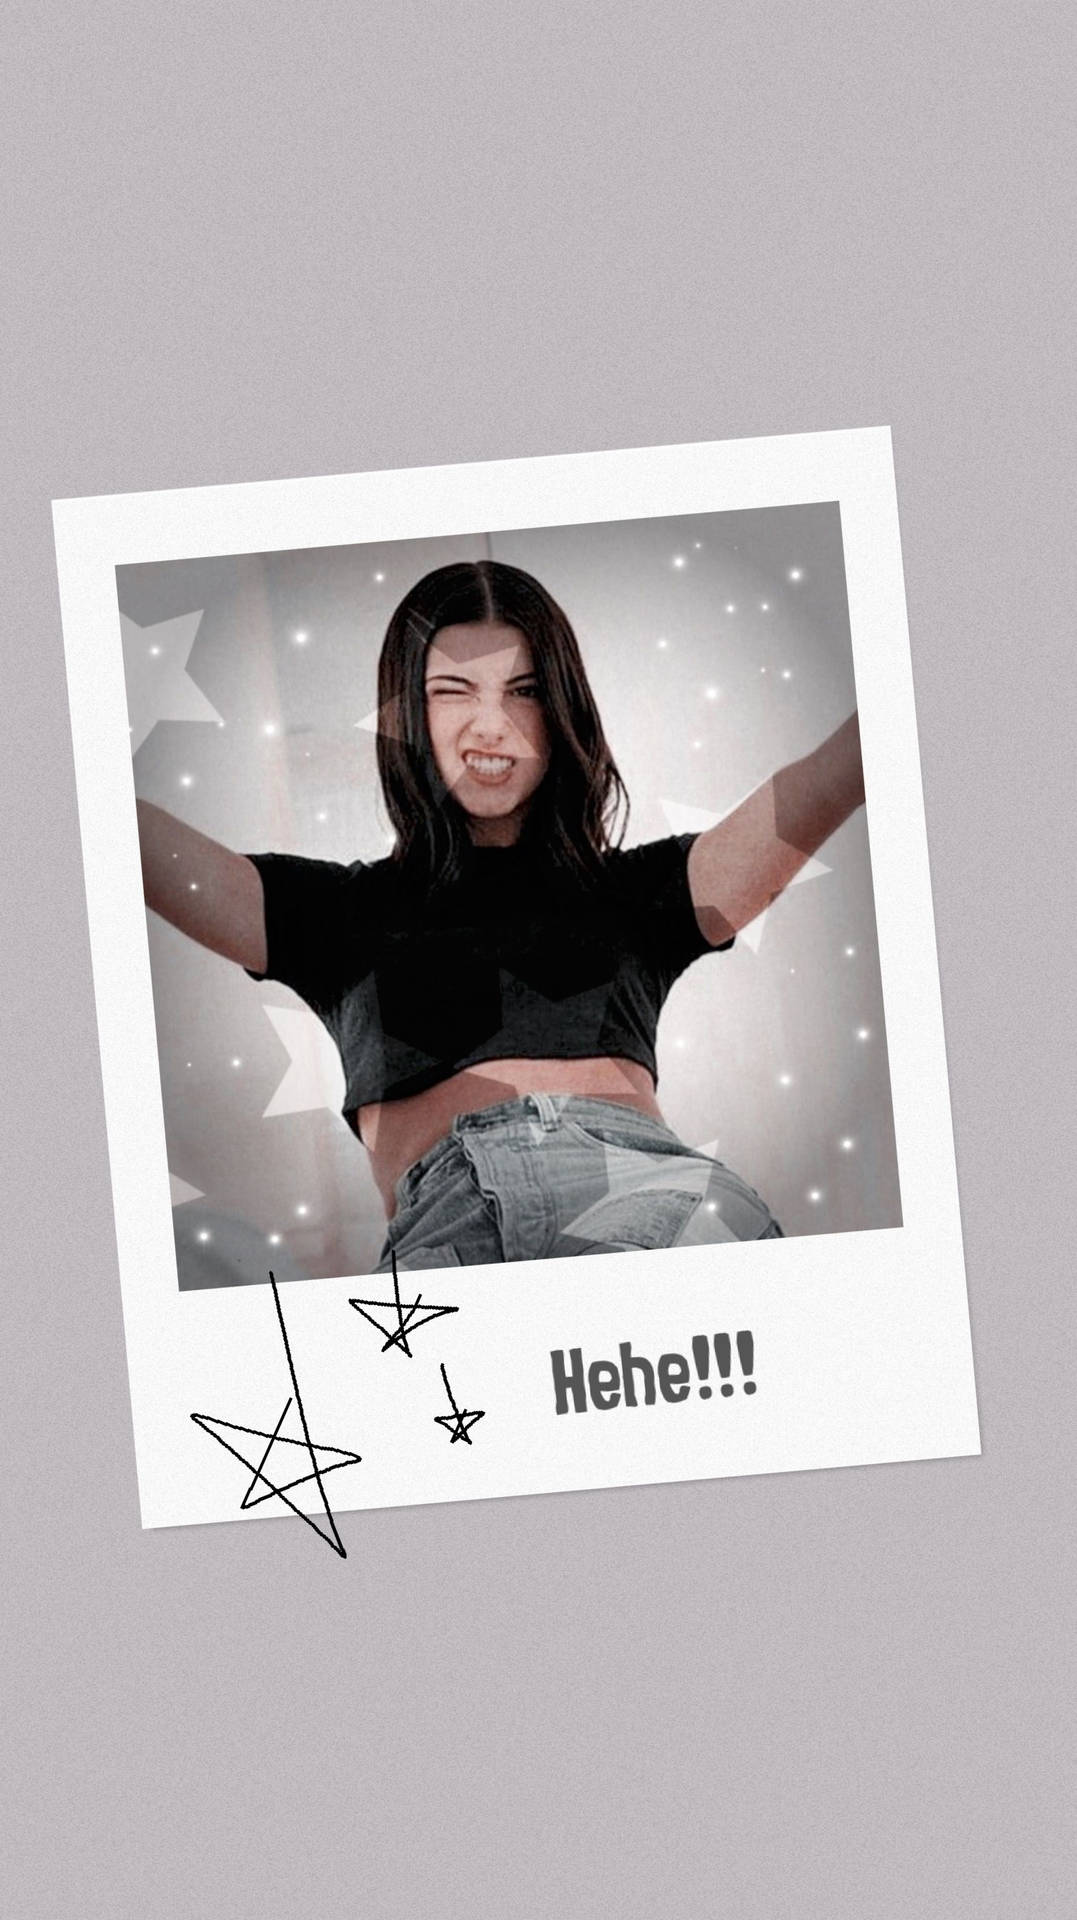 Charli D'amelio's Unique Polaroid Snapshot Background